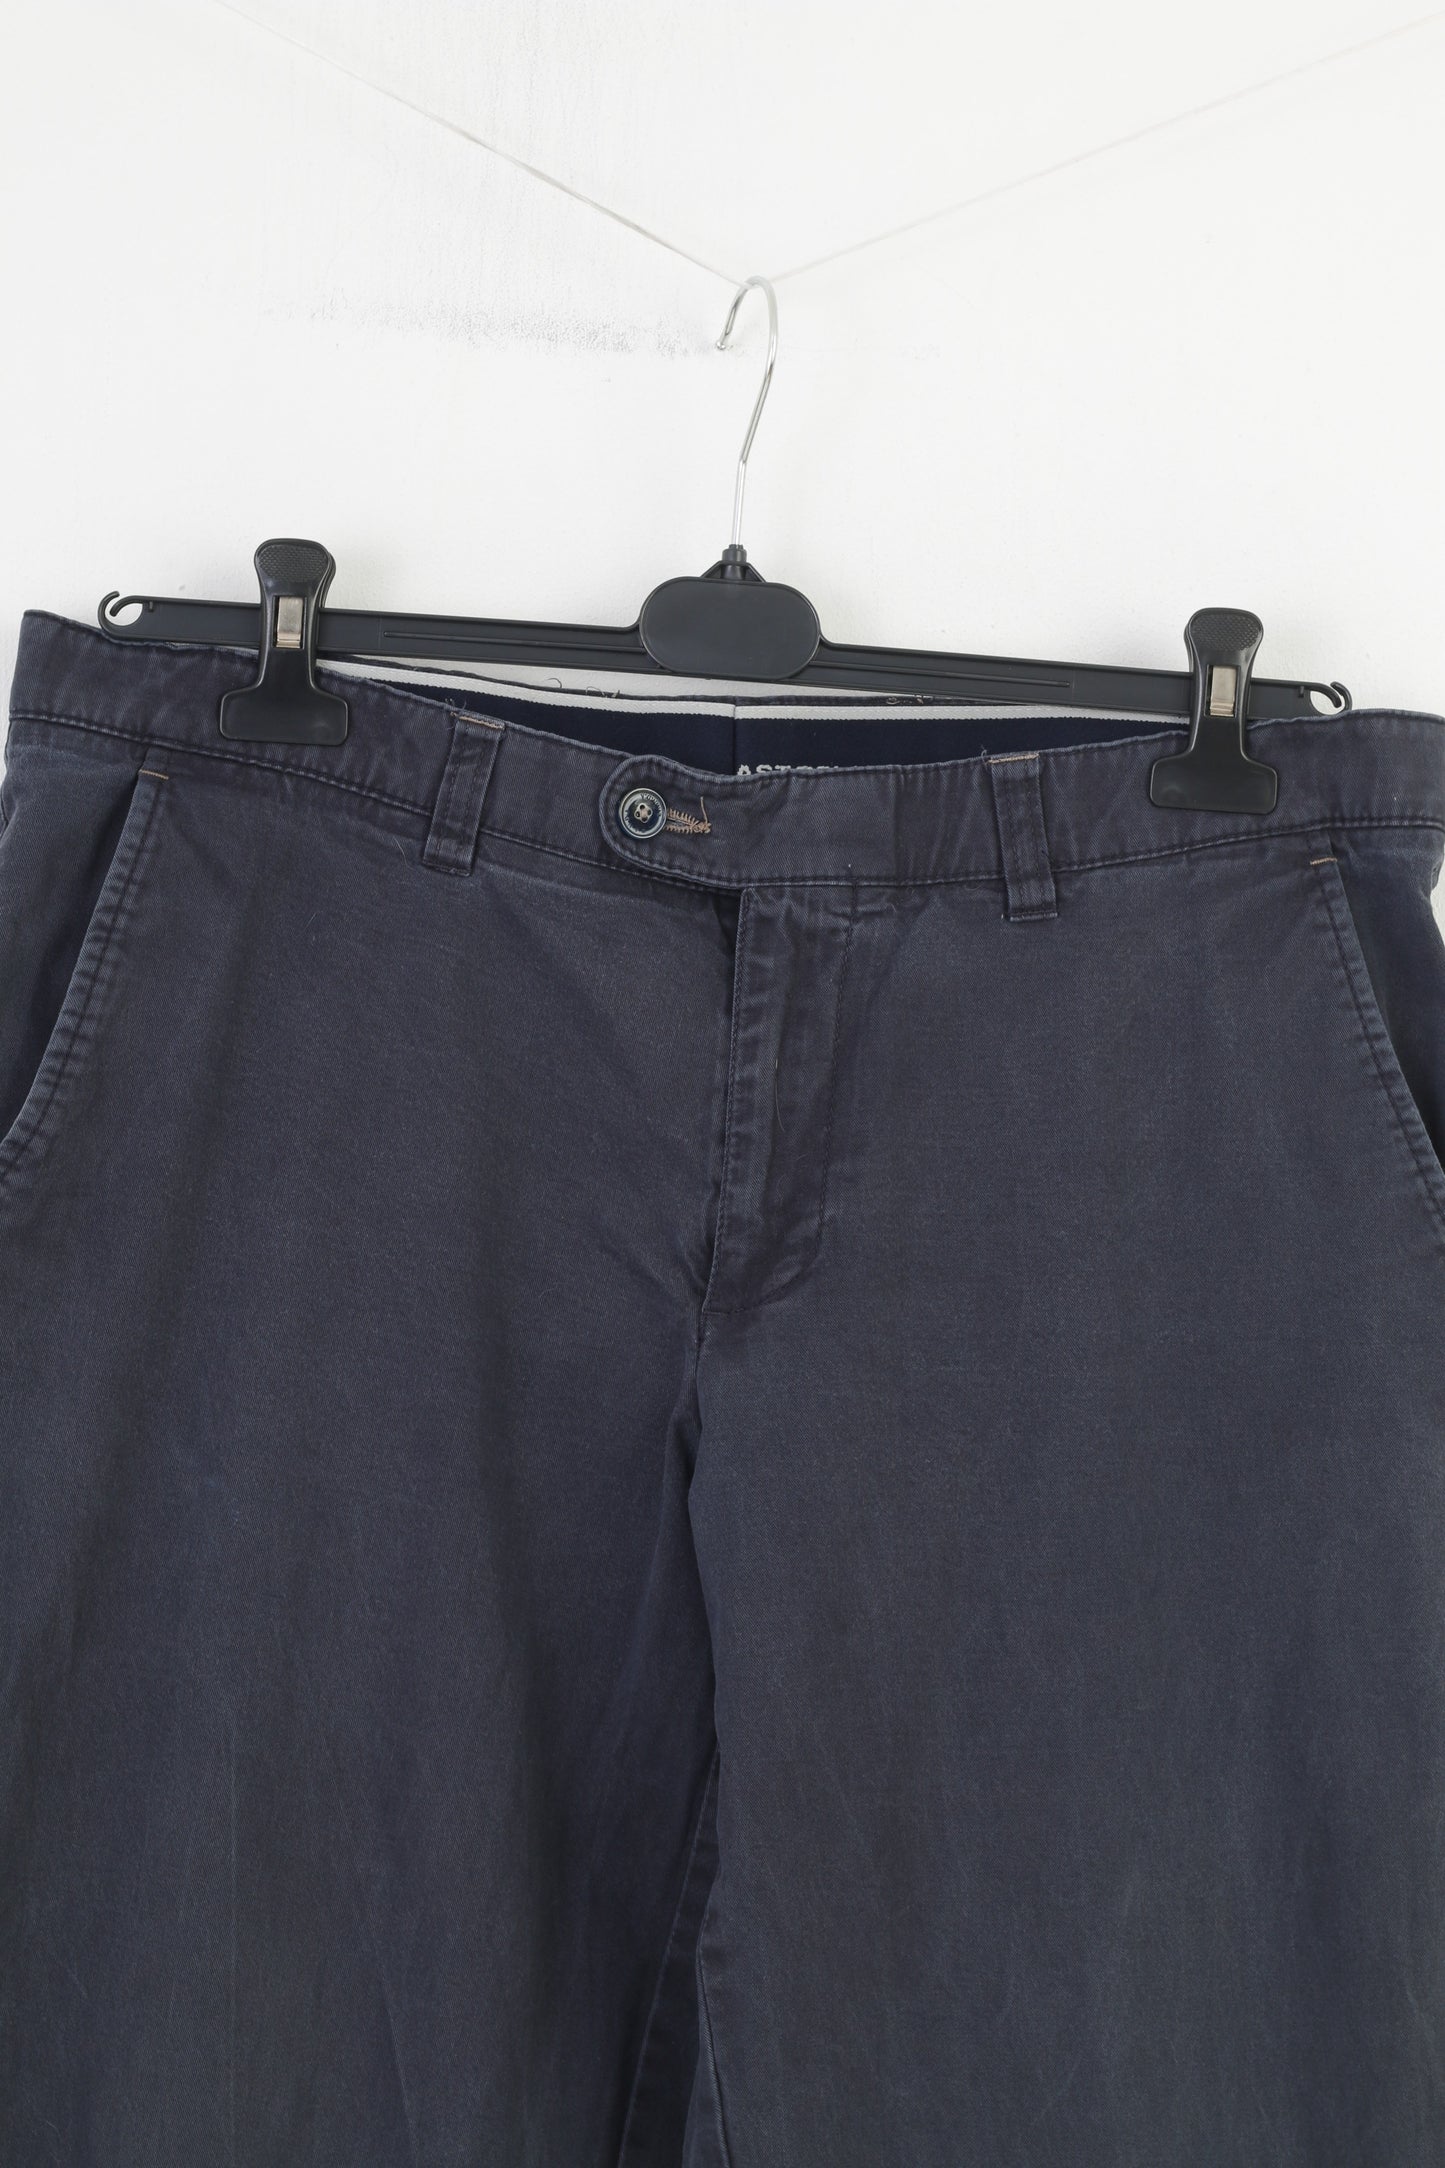 Canda Men 54 Trousers Navy Blue Cotton Elastoflex Regular Fit Top